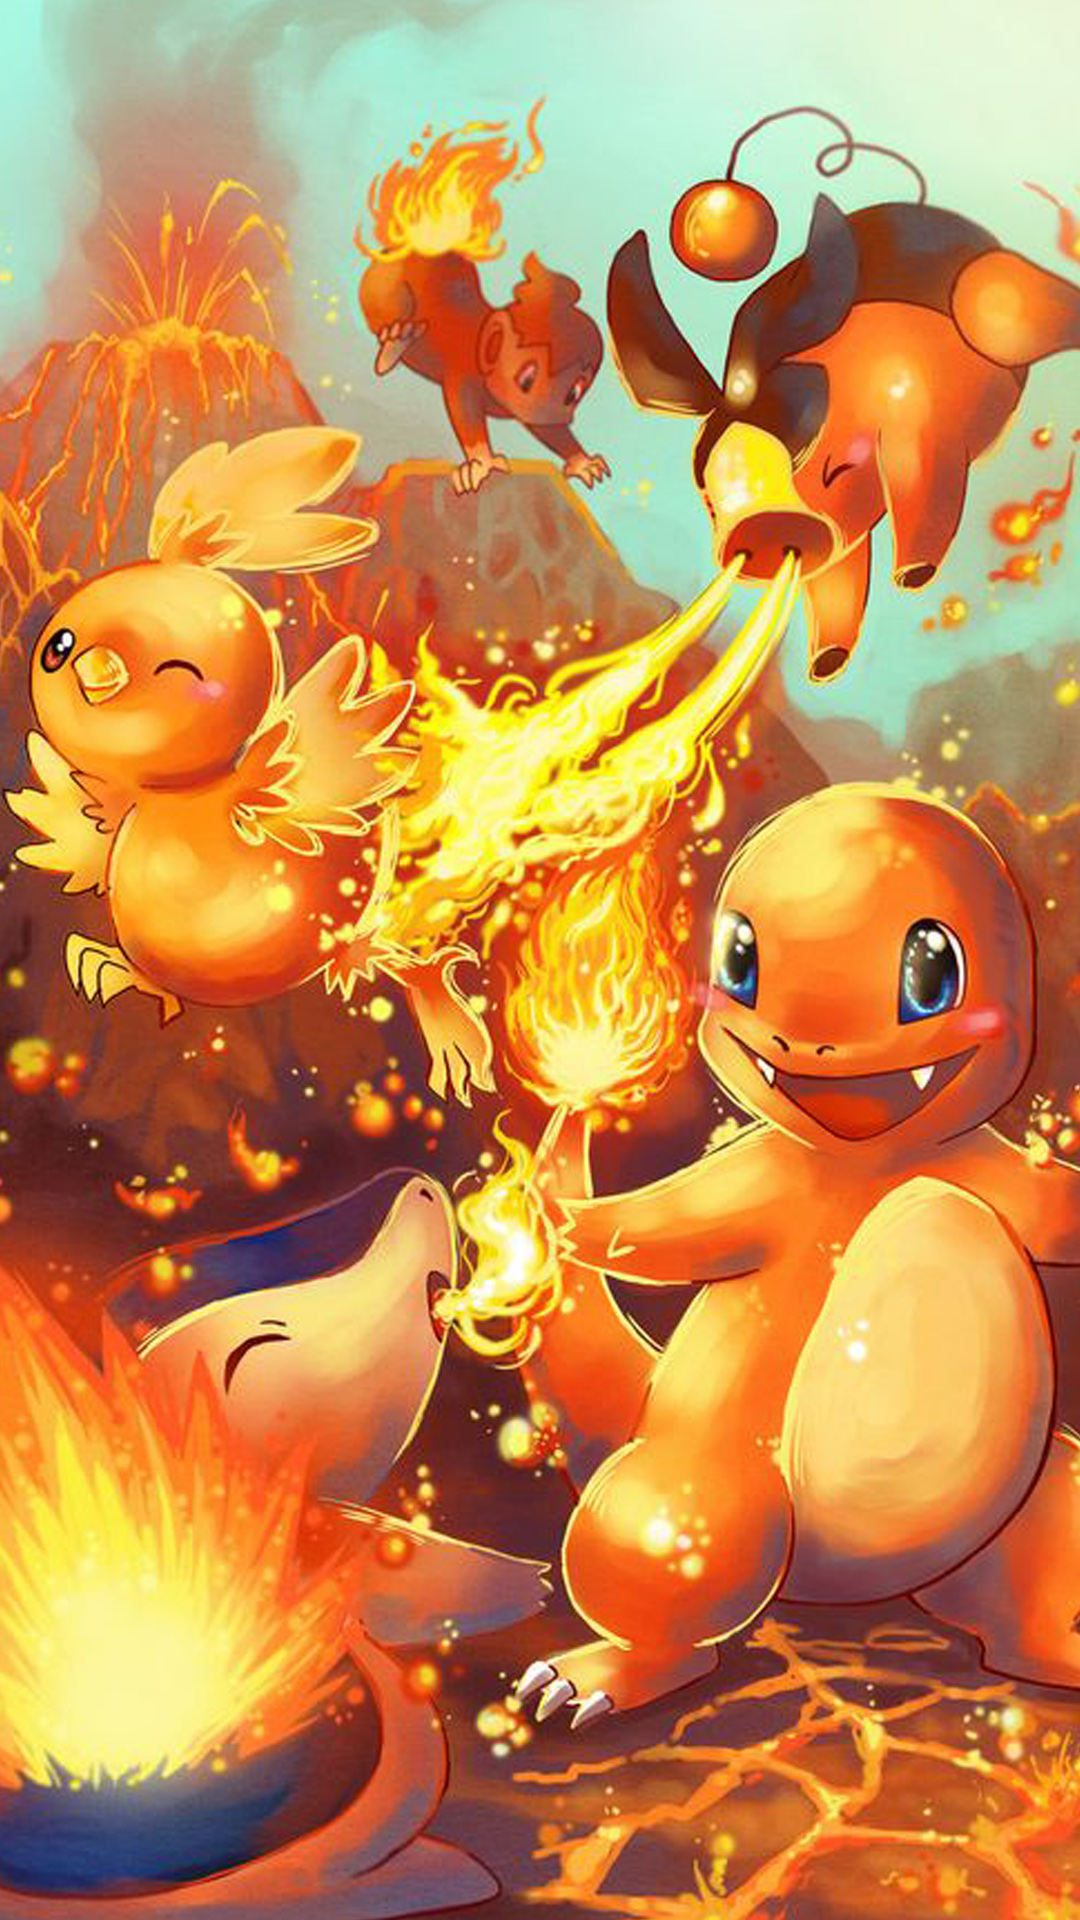 Pokémon wallpaper for iPhone